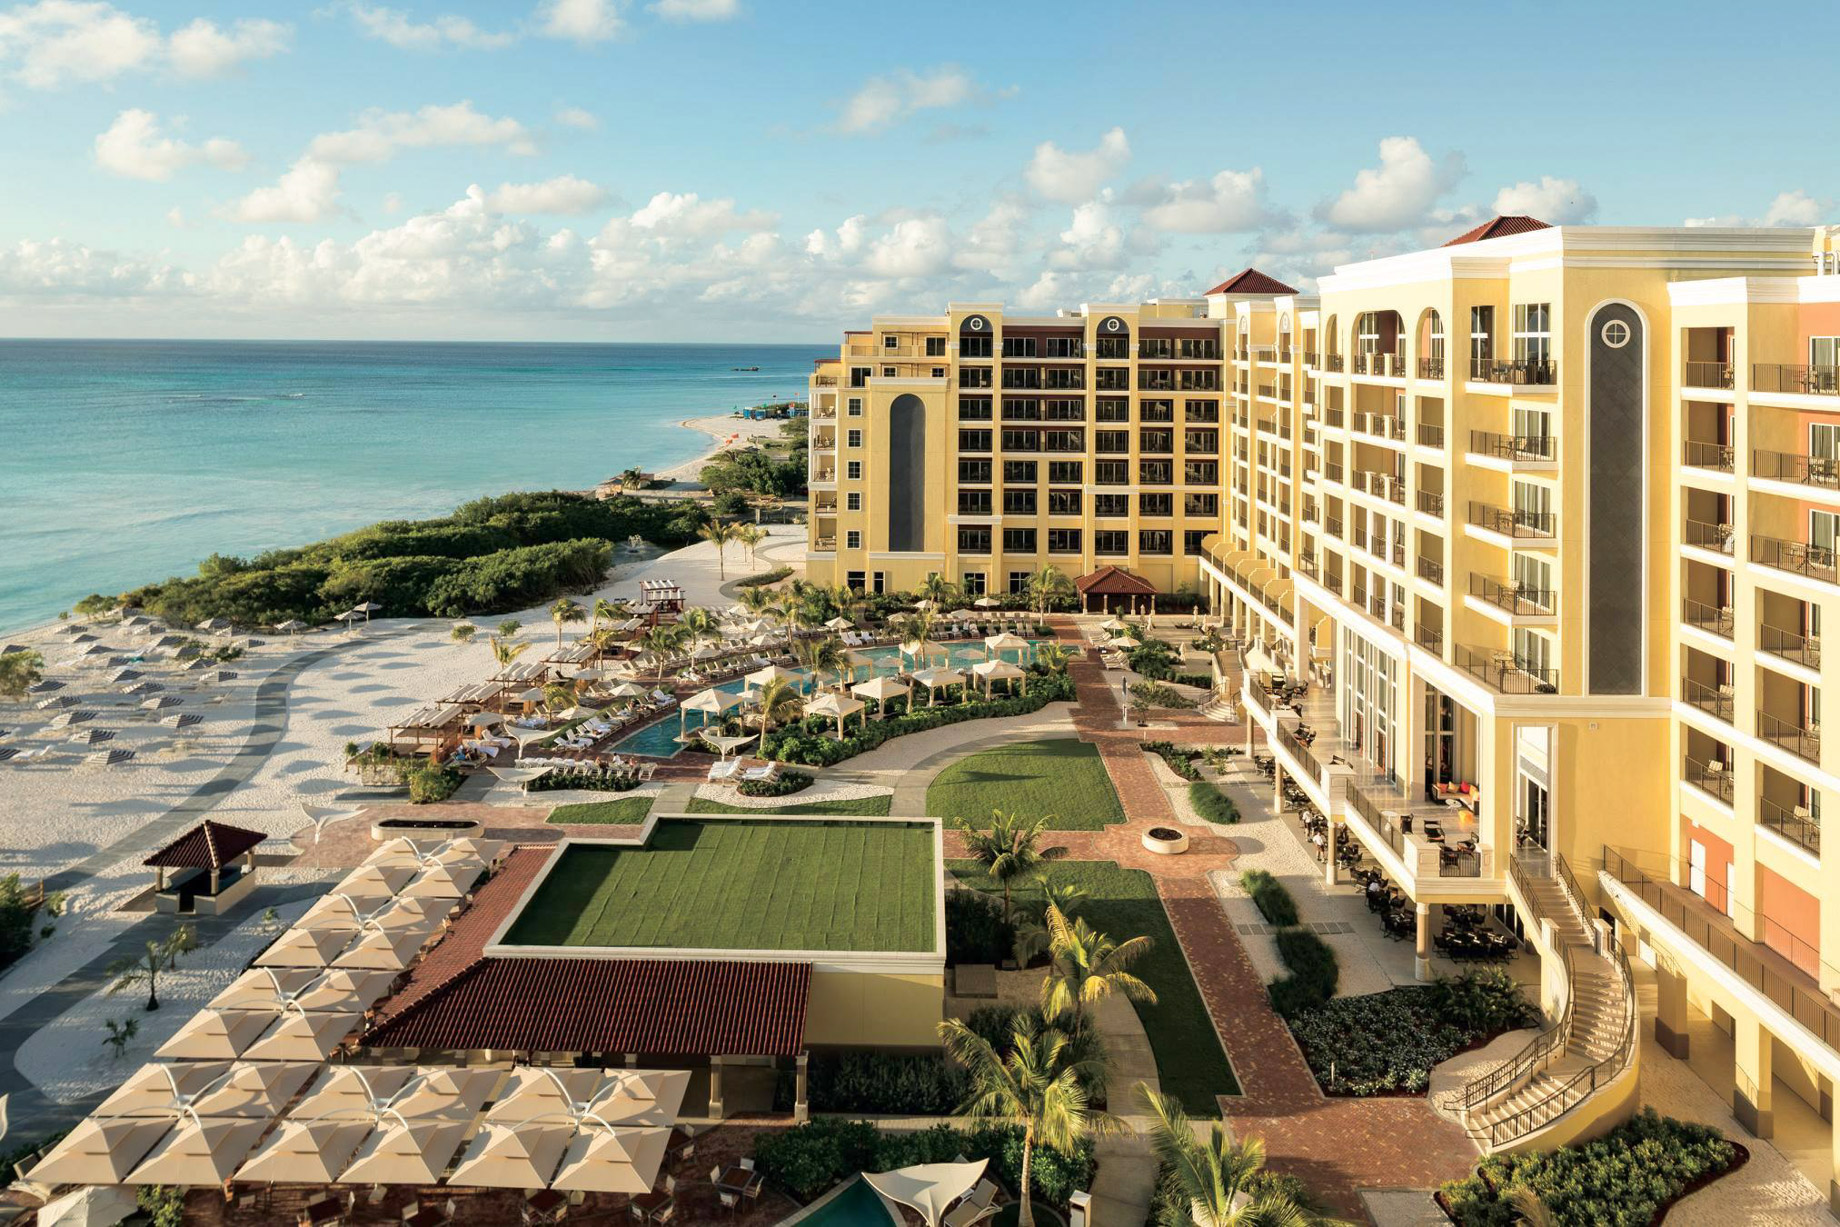 The Ritz-Carlton, Aruba Resort - Palm Beach, Aruba - Exterior Property View